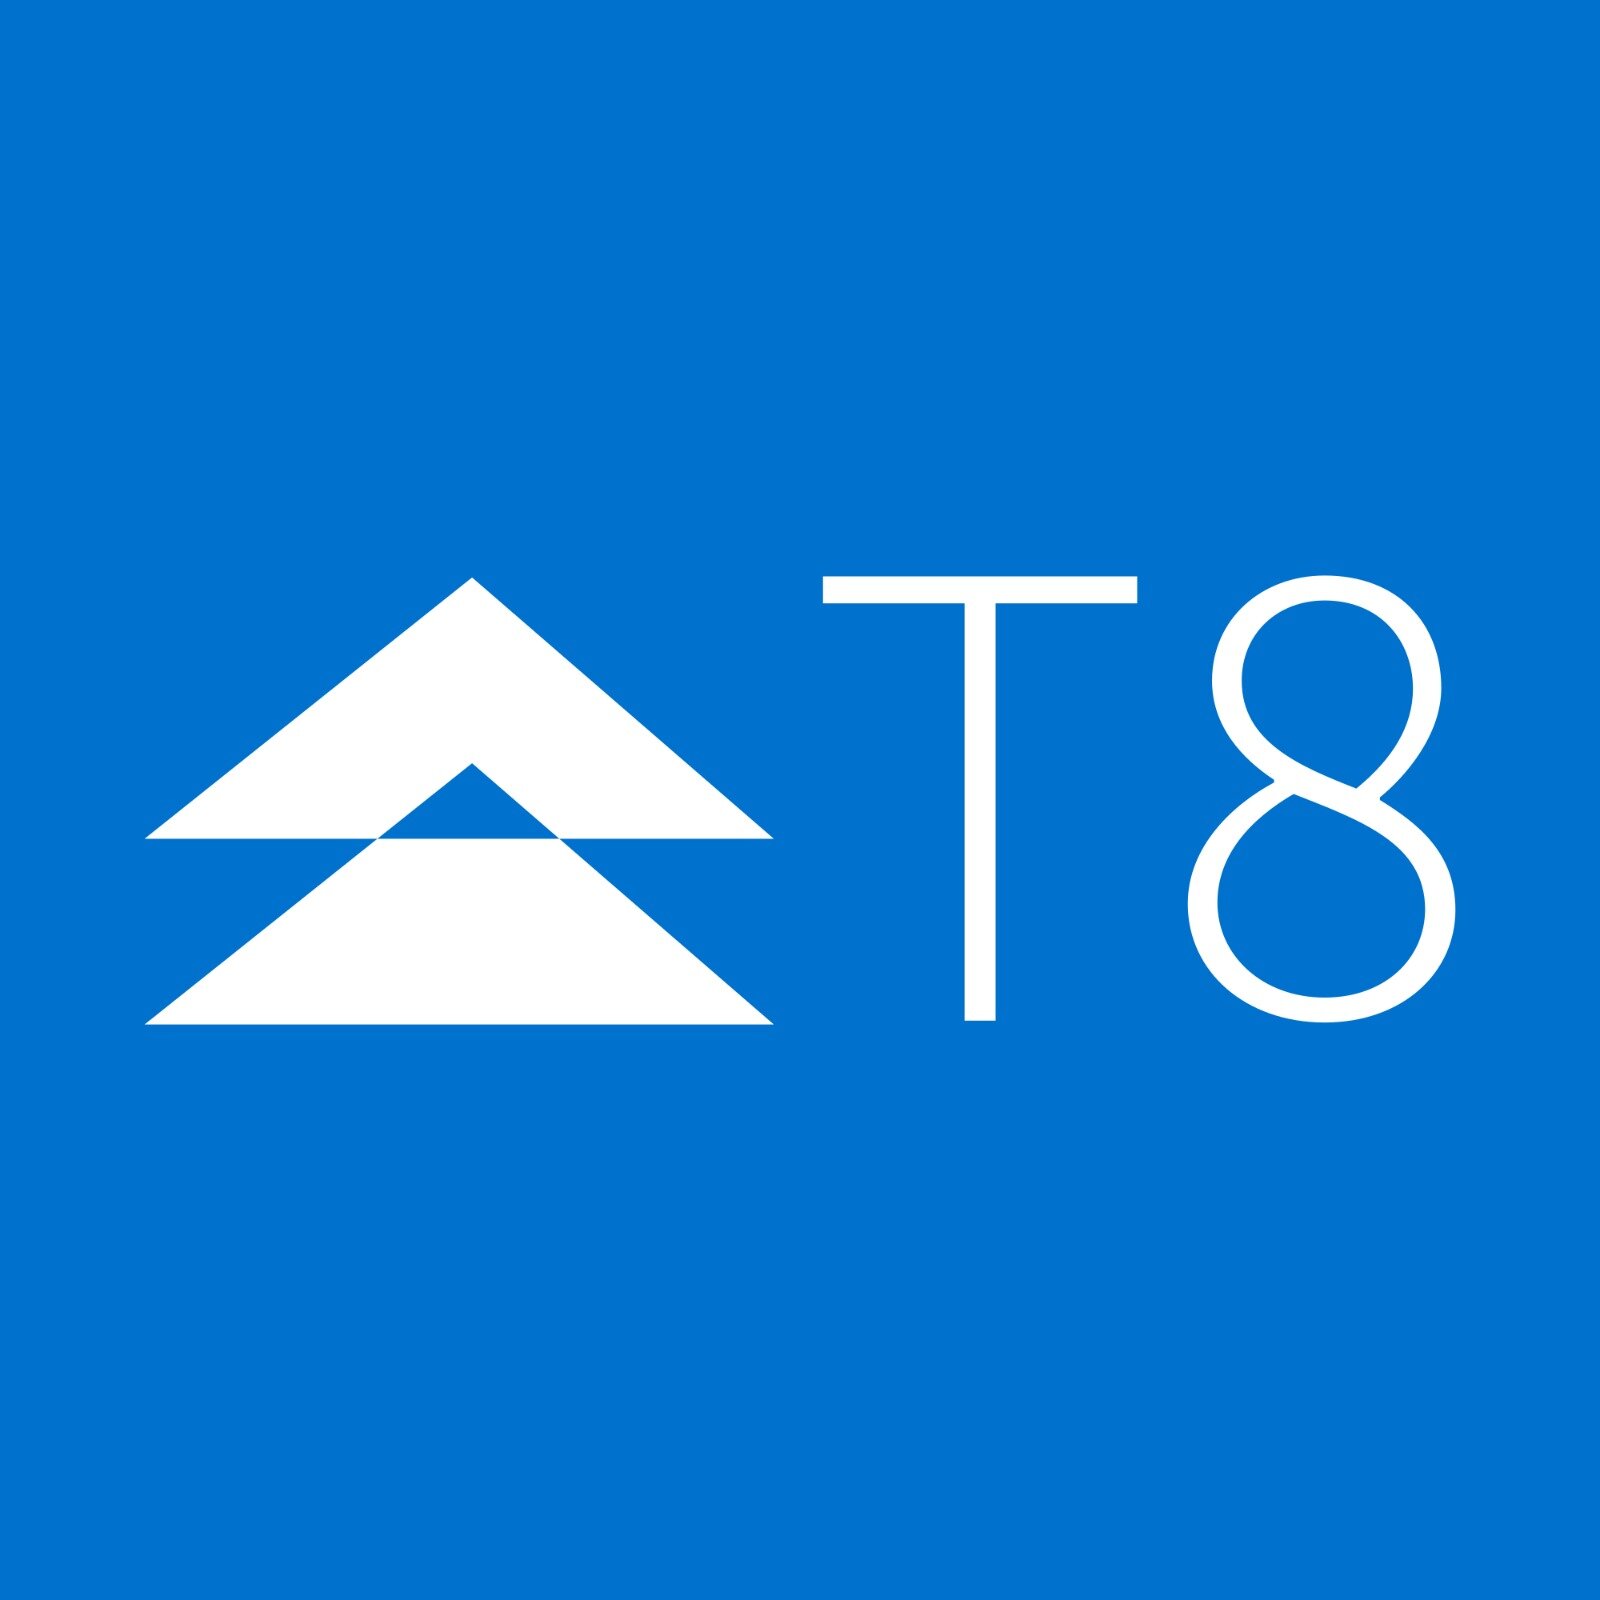 T8 logo 2020.jpeg